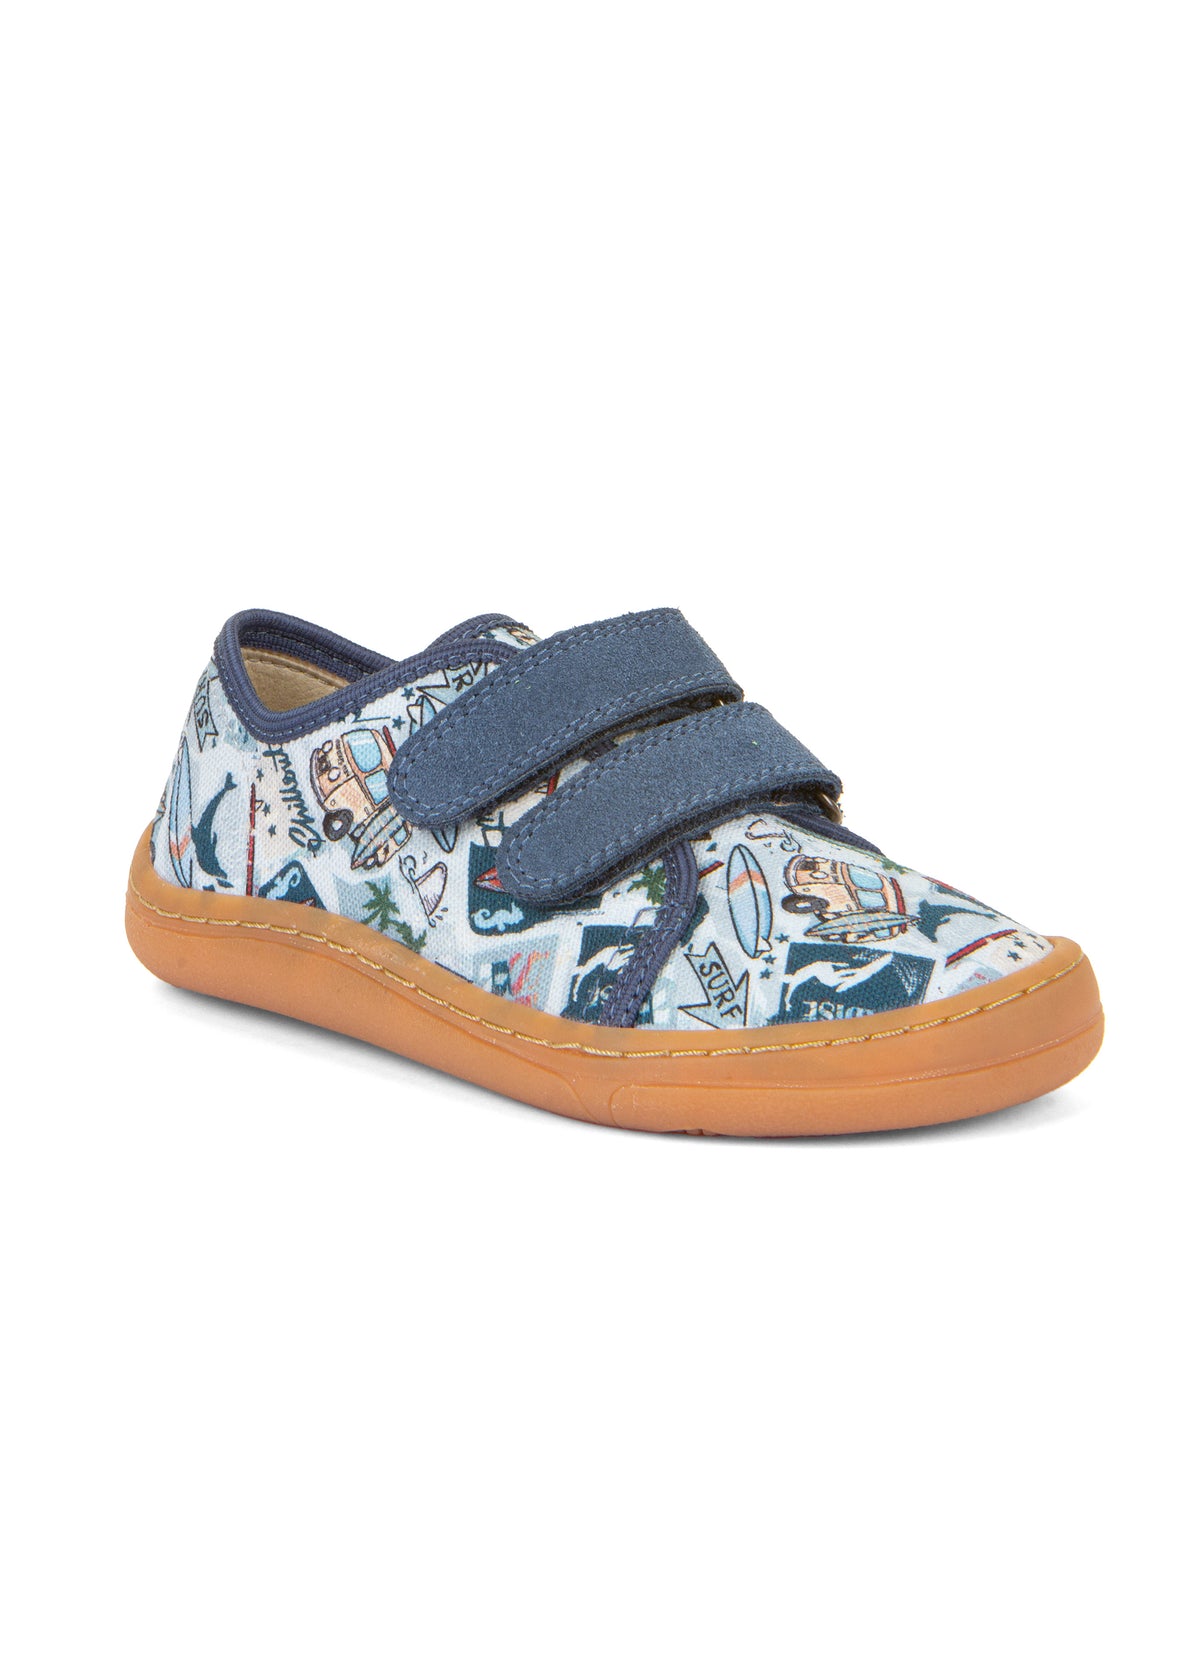 Children's barefoot sneakers - light blue, Chill &amp; Surf, beach vibes